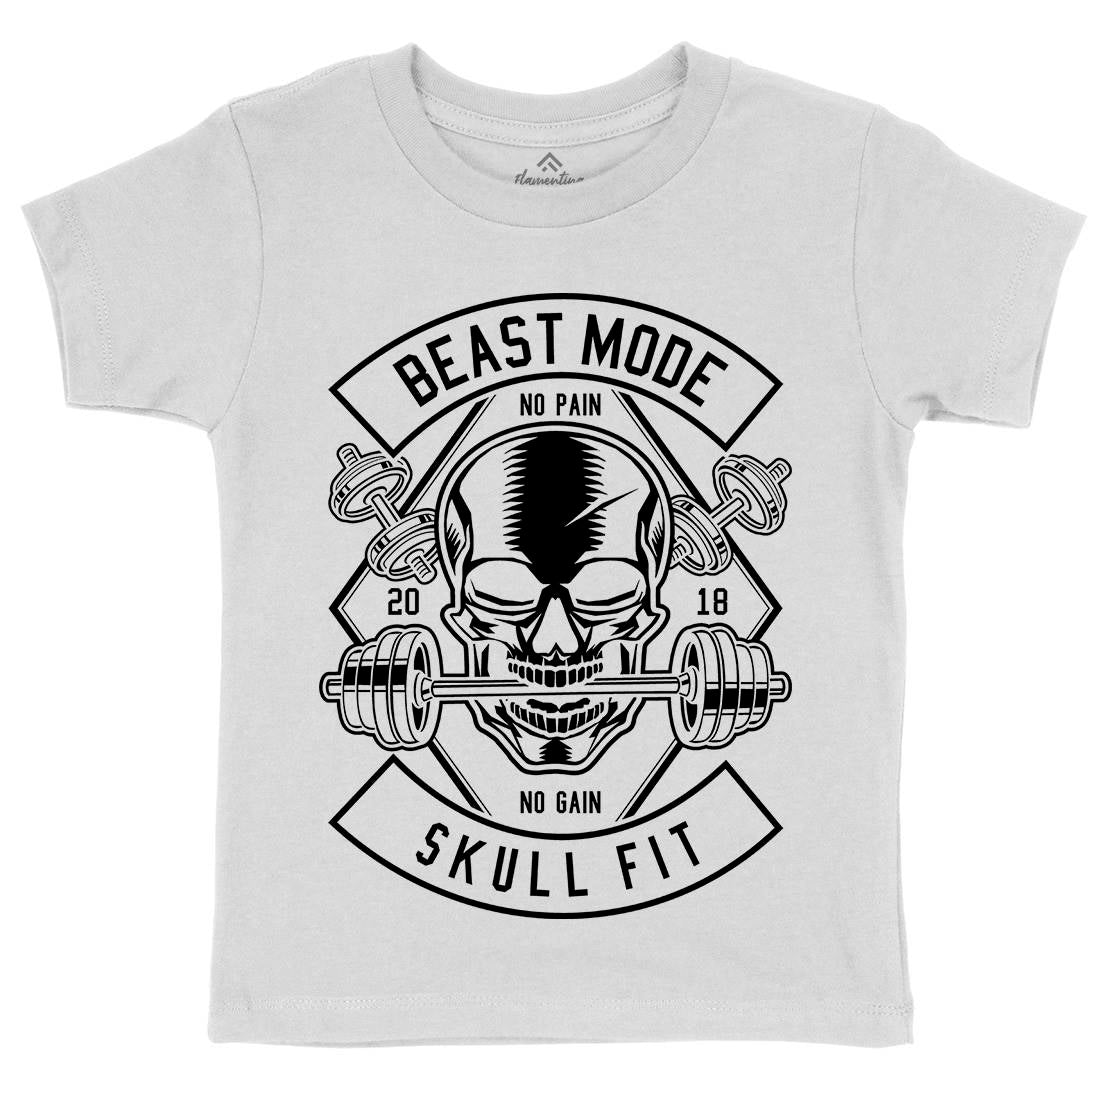 Skull Fit Kids Crew Neck T-Shirt Gym B628